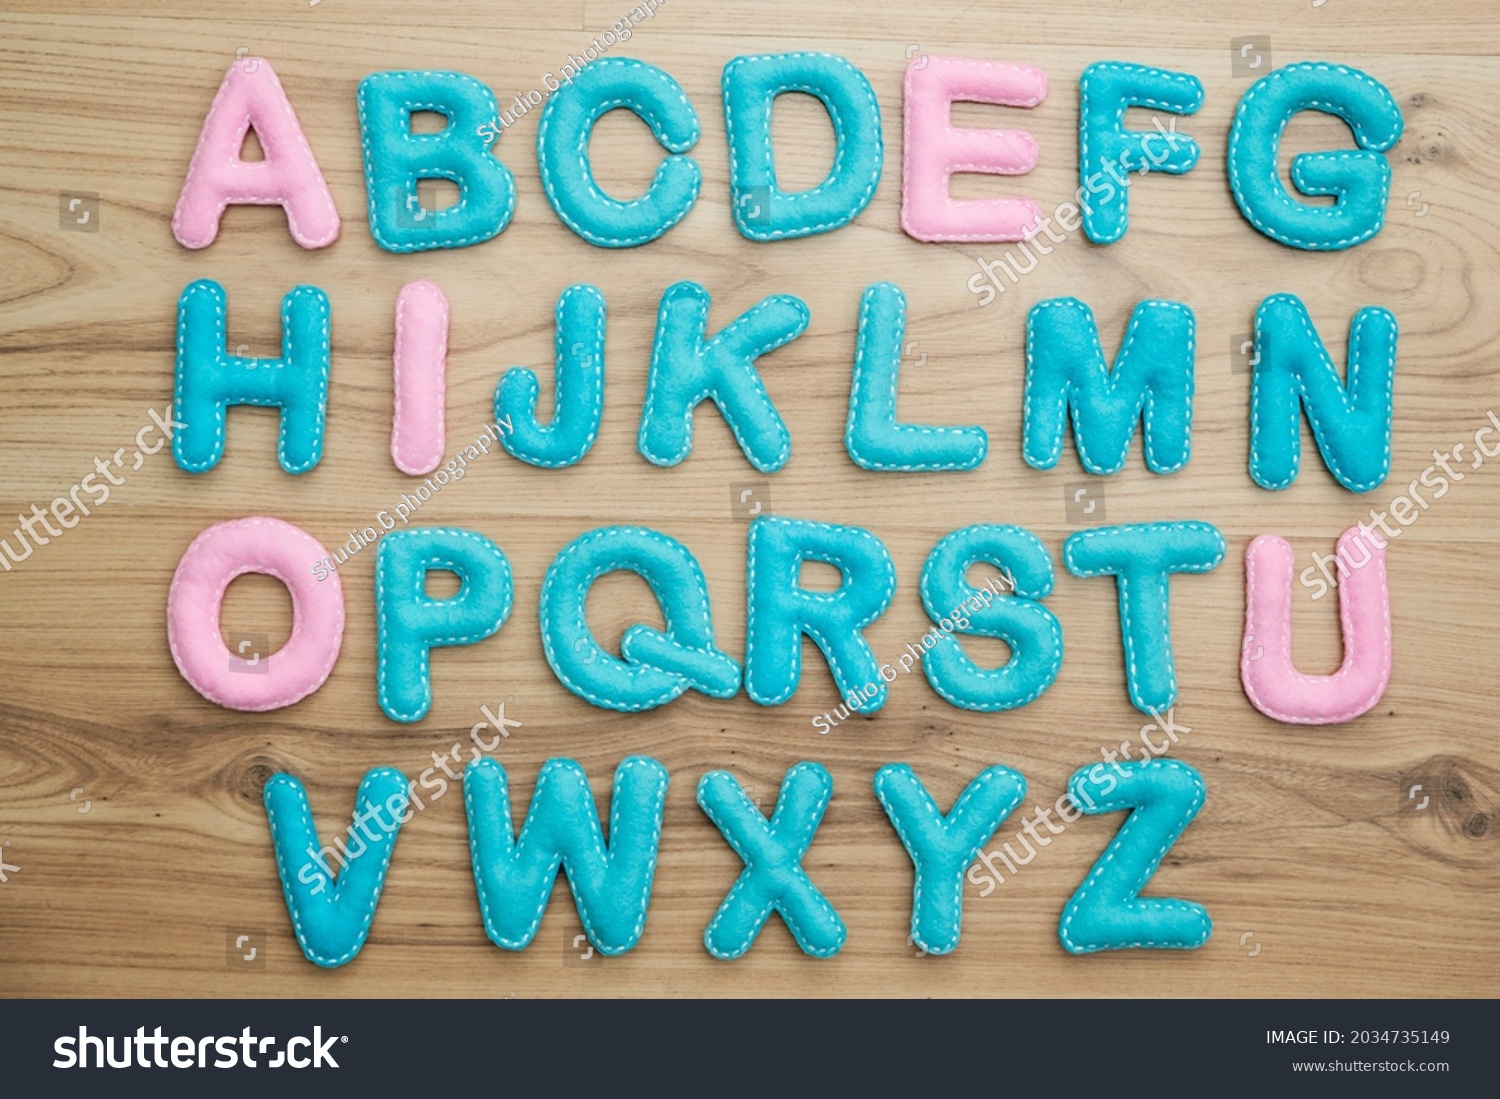 full-alphabet-capital-letters-made-stuffed-stock-photo-2034735149